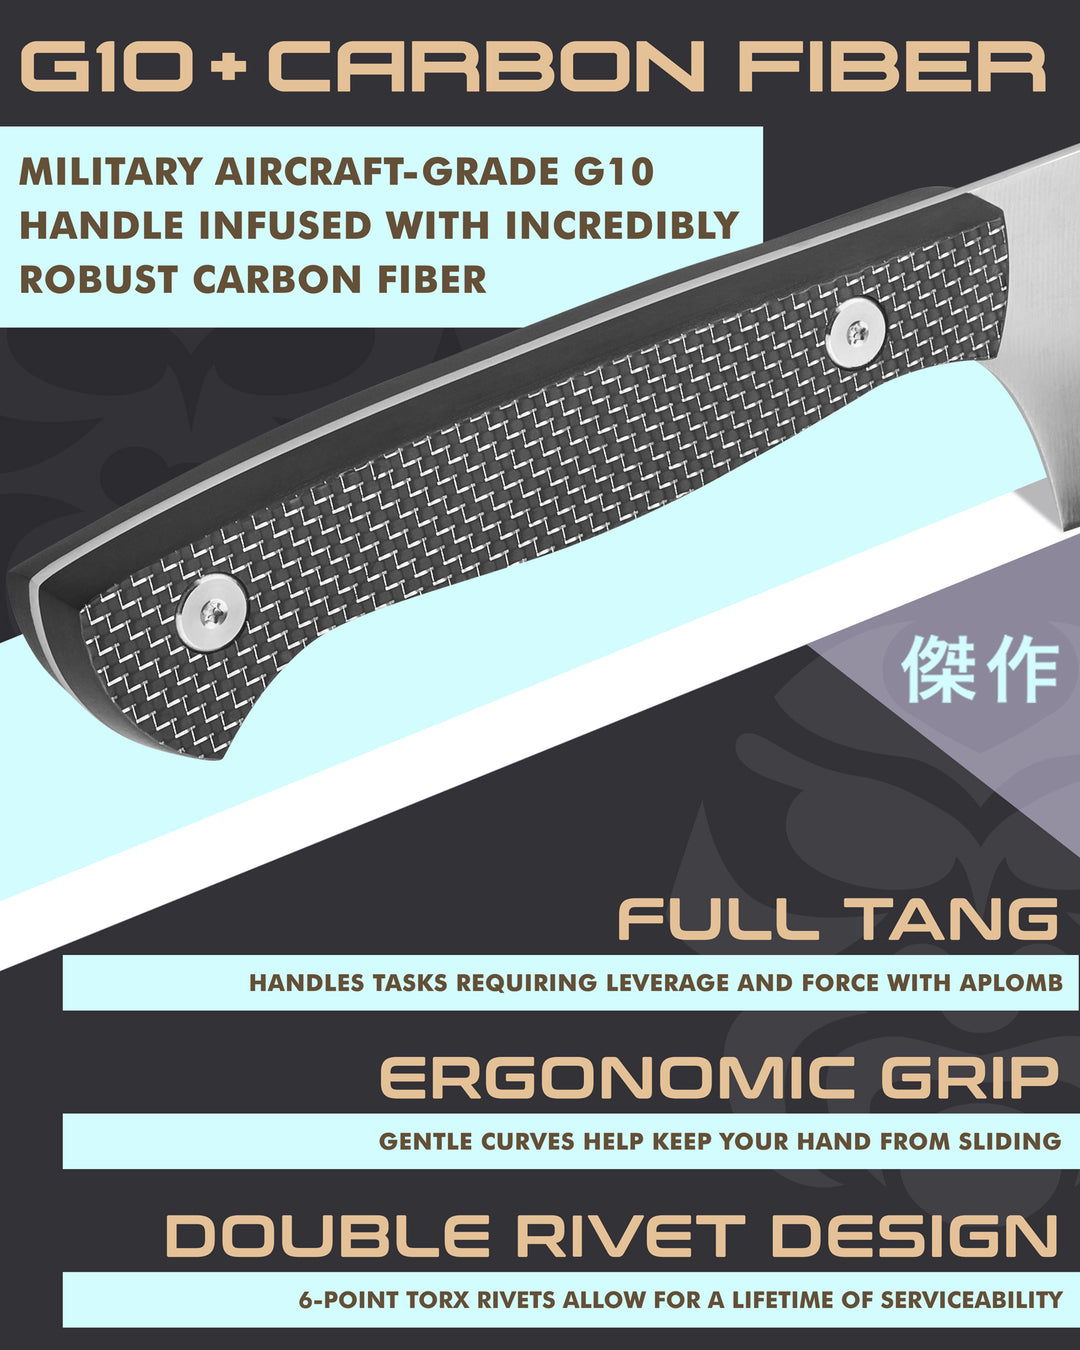 Kessaku Senshi Nakiri Knife handle features: Carbon fiber infused G10 handle, full tang, ergonomic grip, double torx rivet design